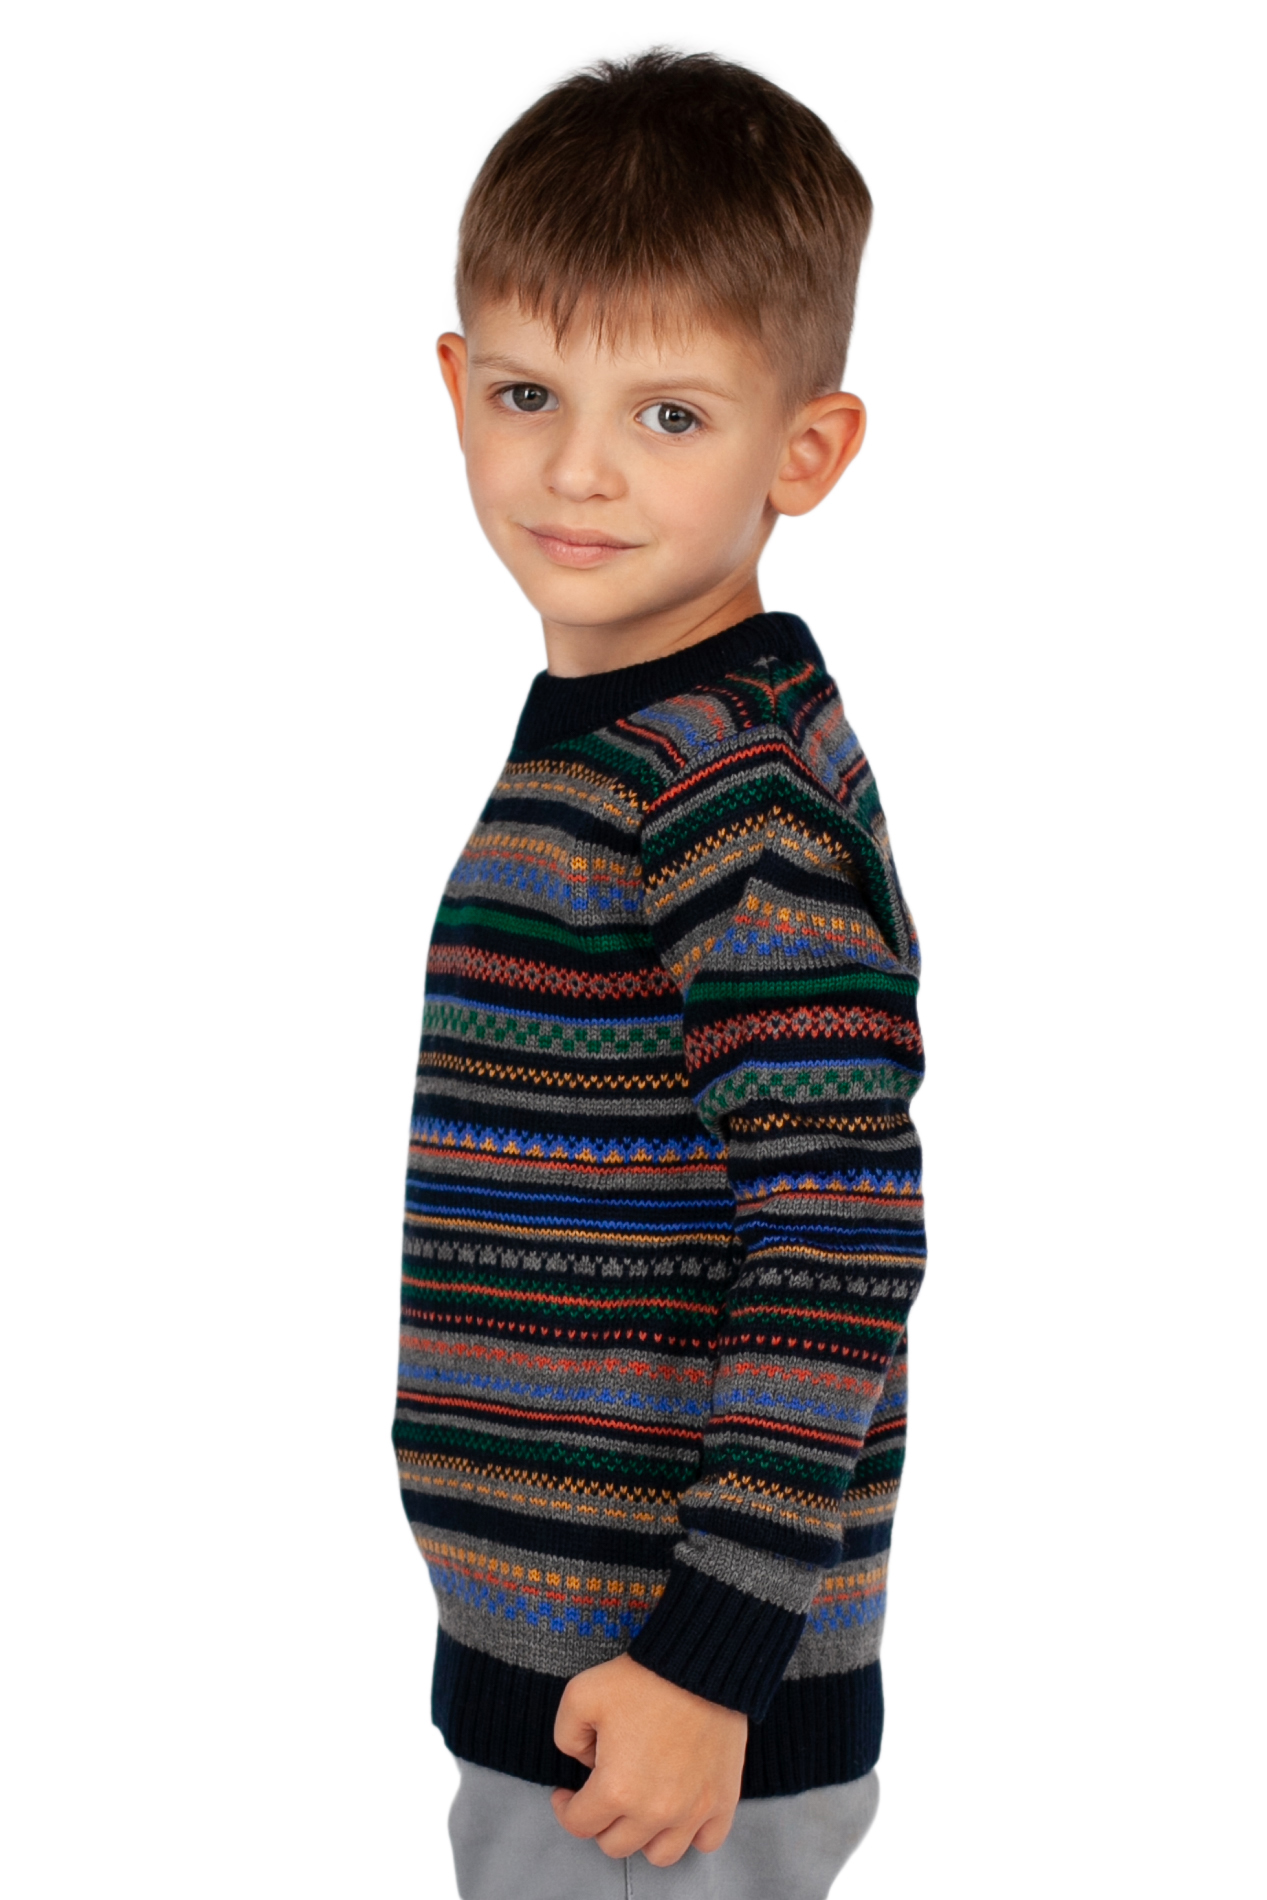 Джемпер для мальчика (арт. baon BK638504), размер 98-104, цвет multicolor#многоцветный